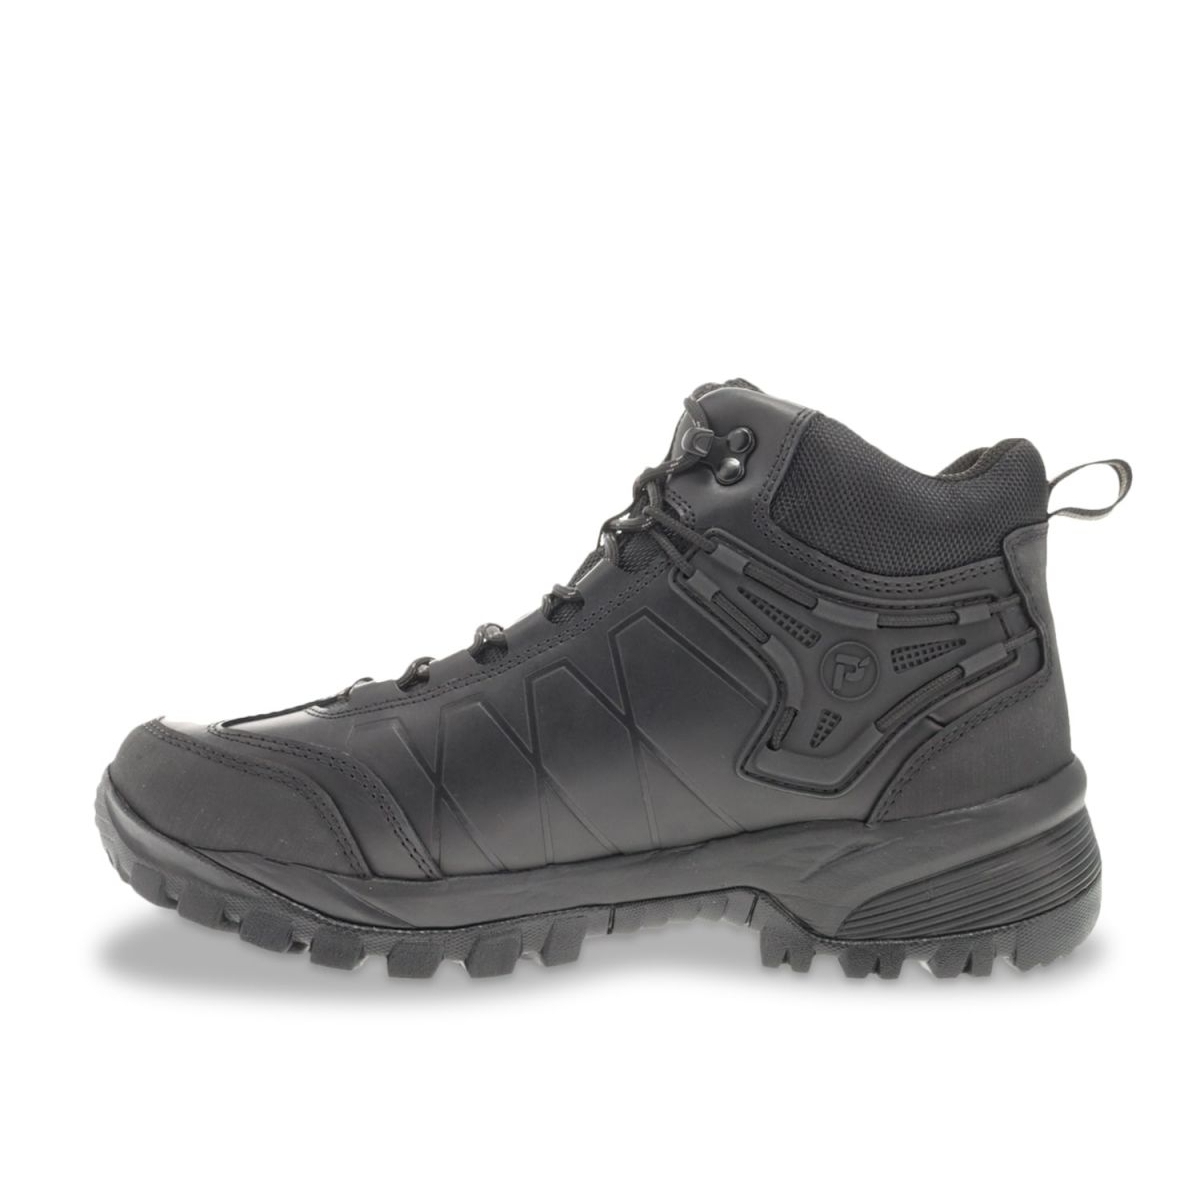 Propet Men's Ridge Walker Force Hiking Boots Black - MBA052LBLK BLACK - BLACK, 9 Wide